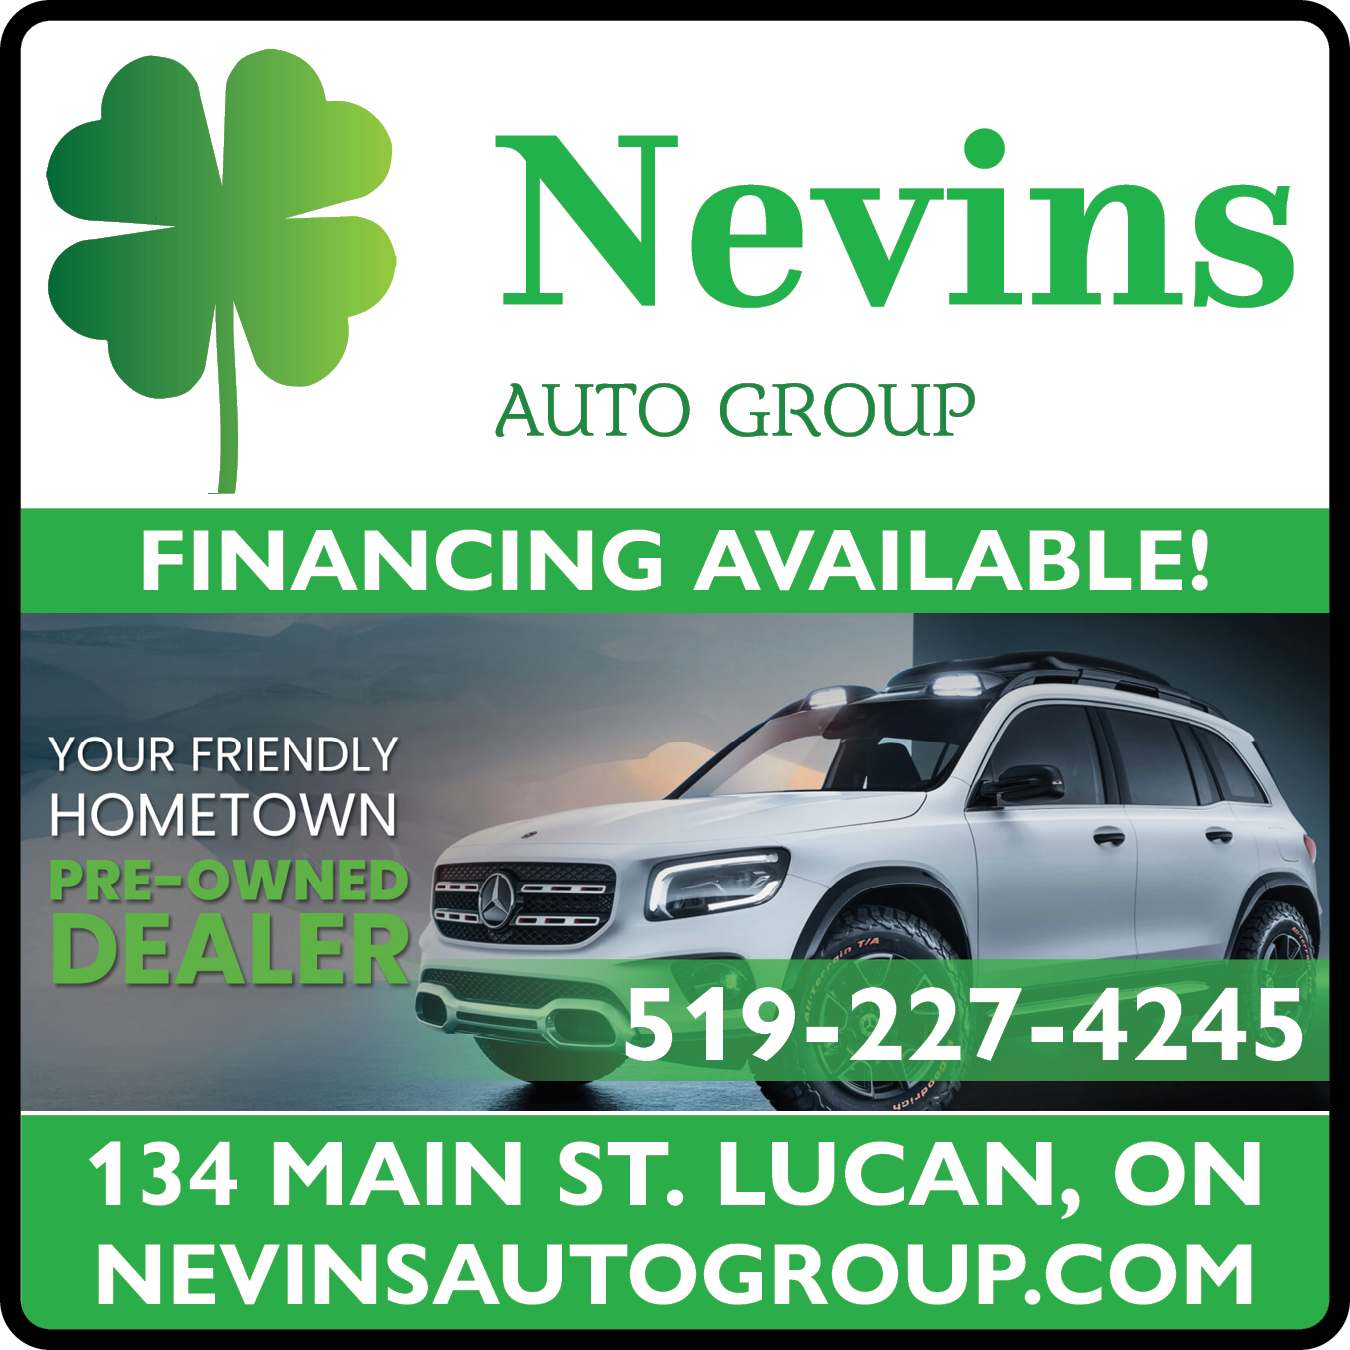 Nevins Auto Group